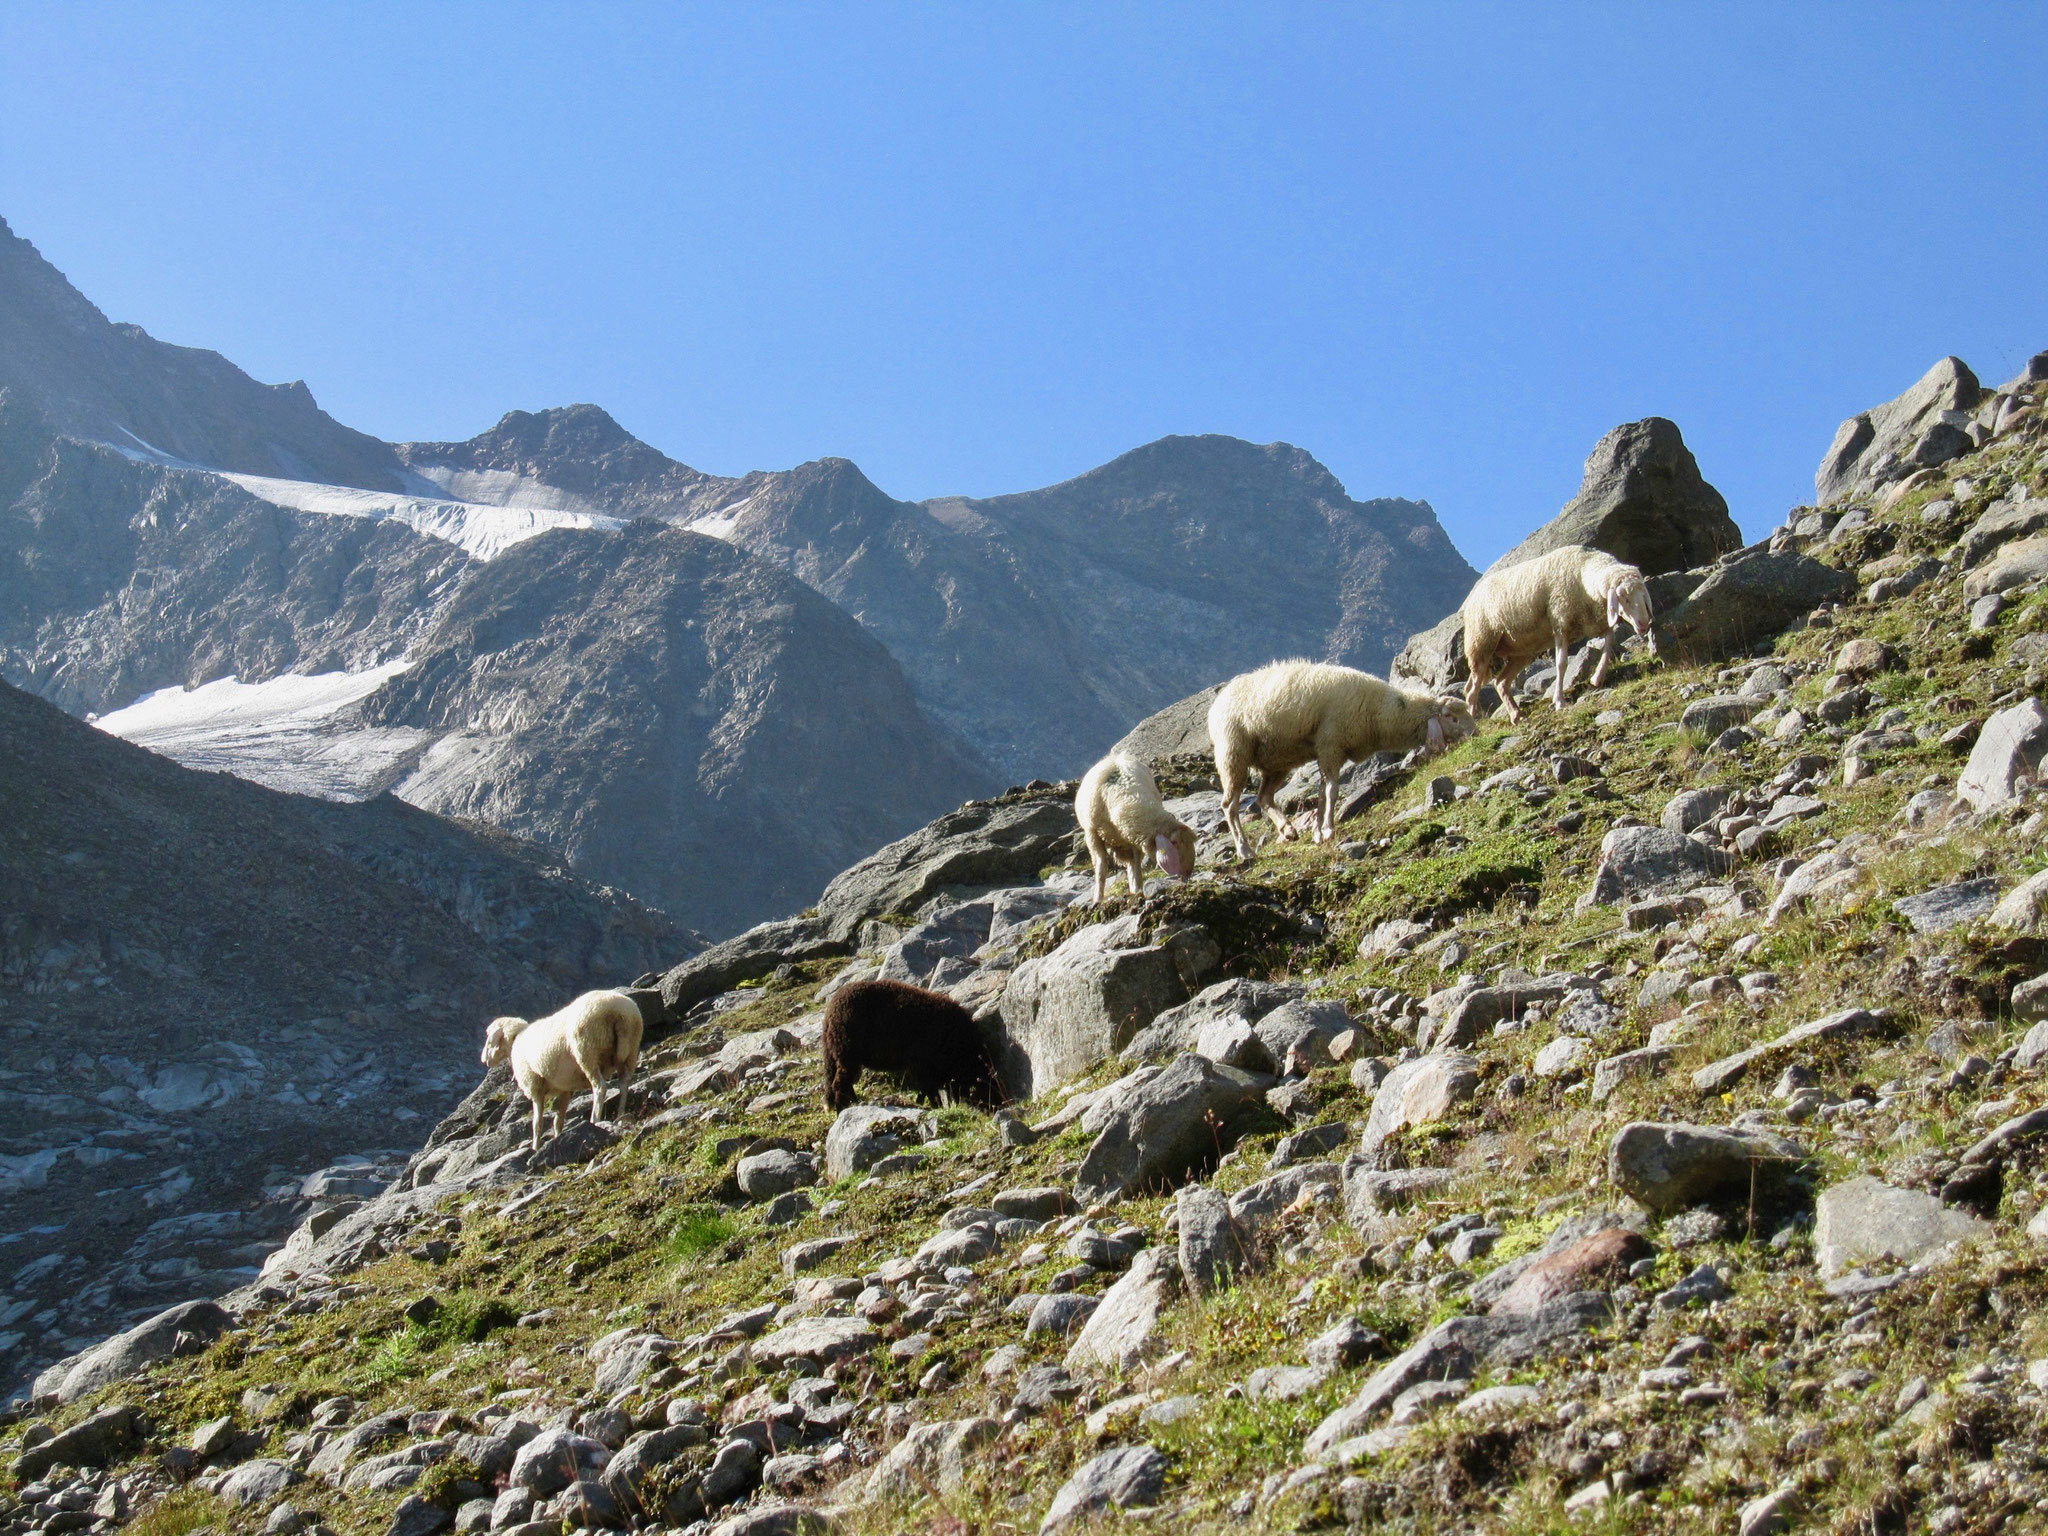 Schafe waren in den höheren Lagen unterwegs